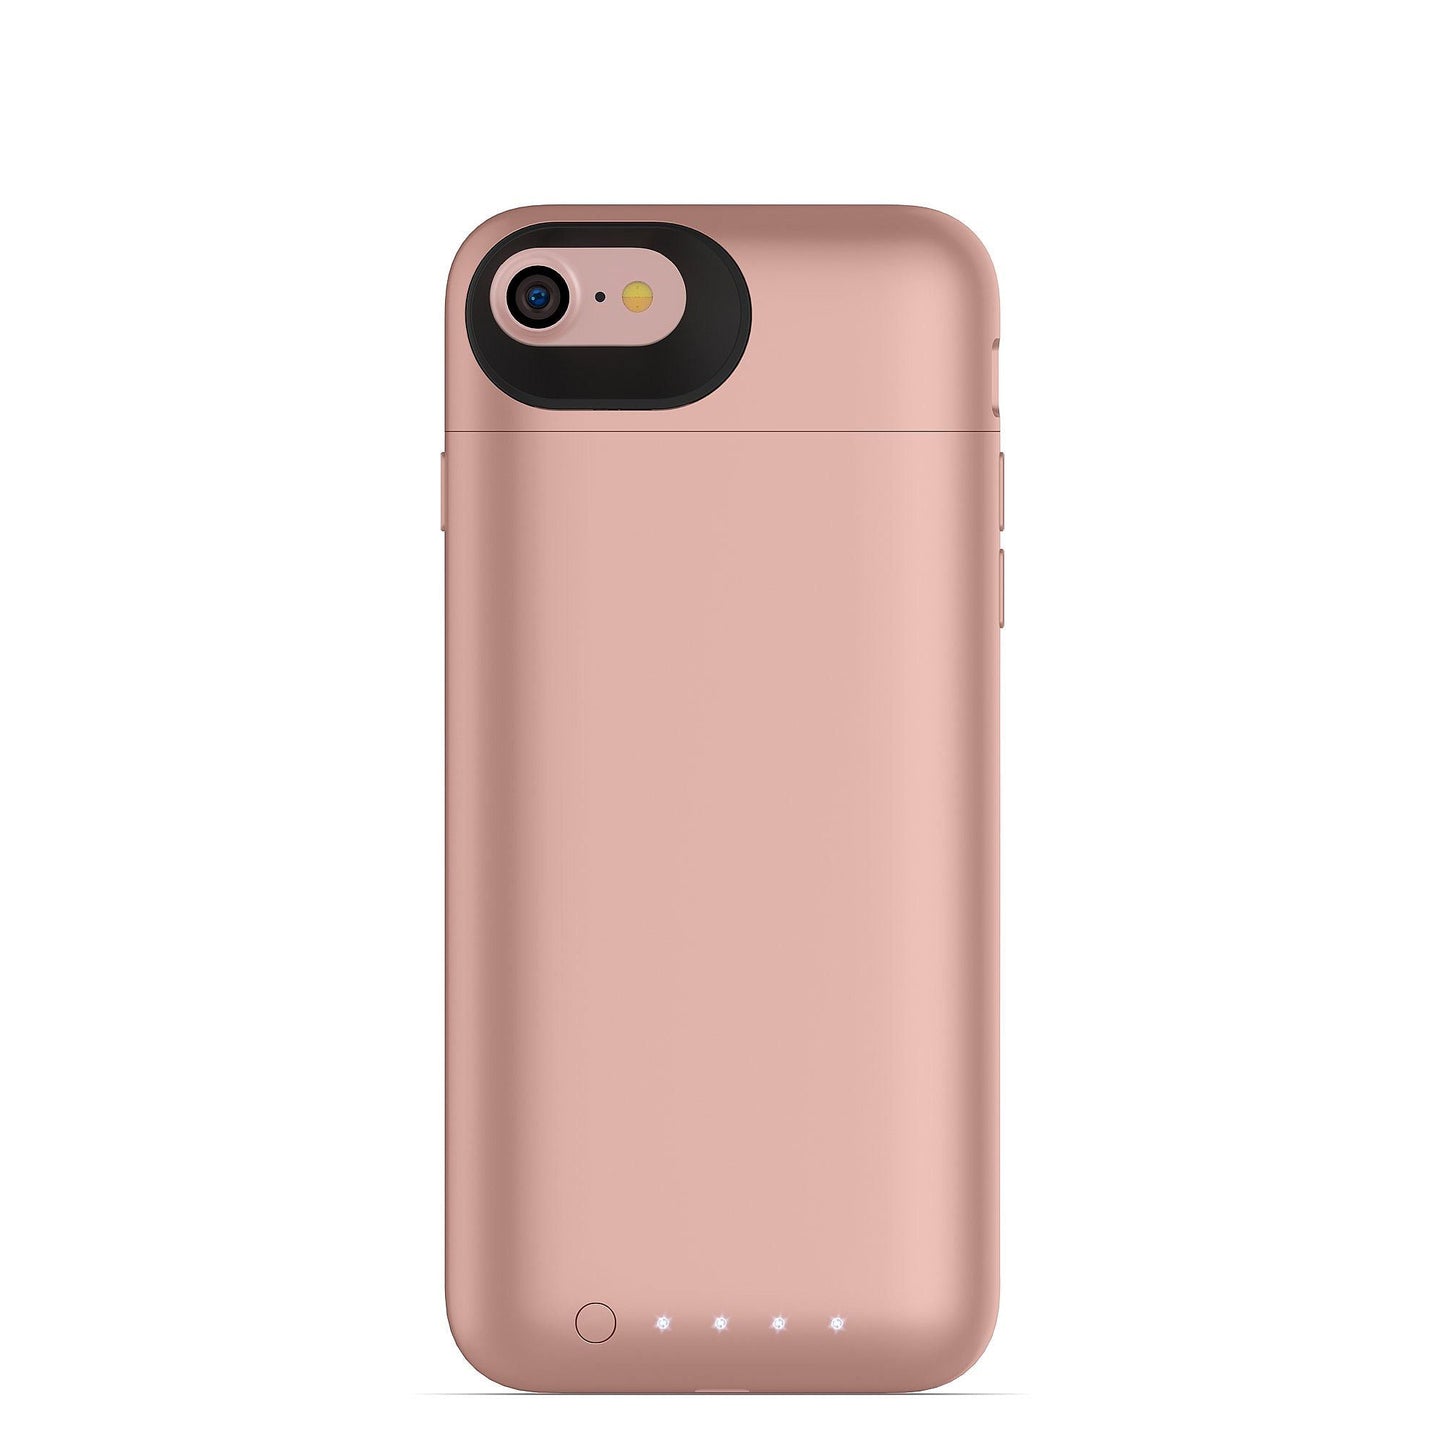 Funda Mophie para iPhone 7 Oro Rosa